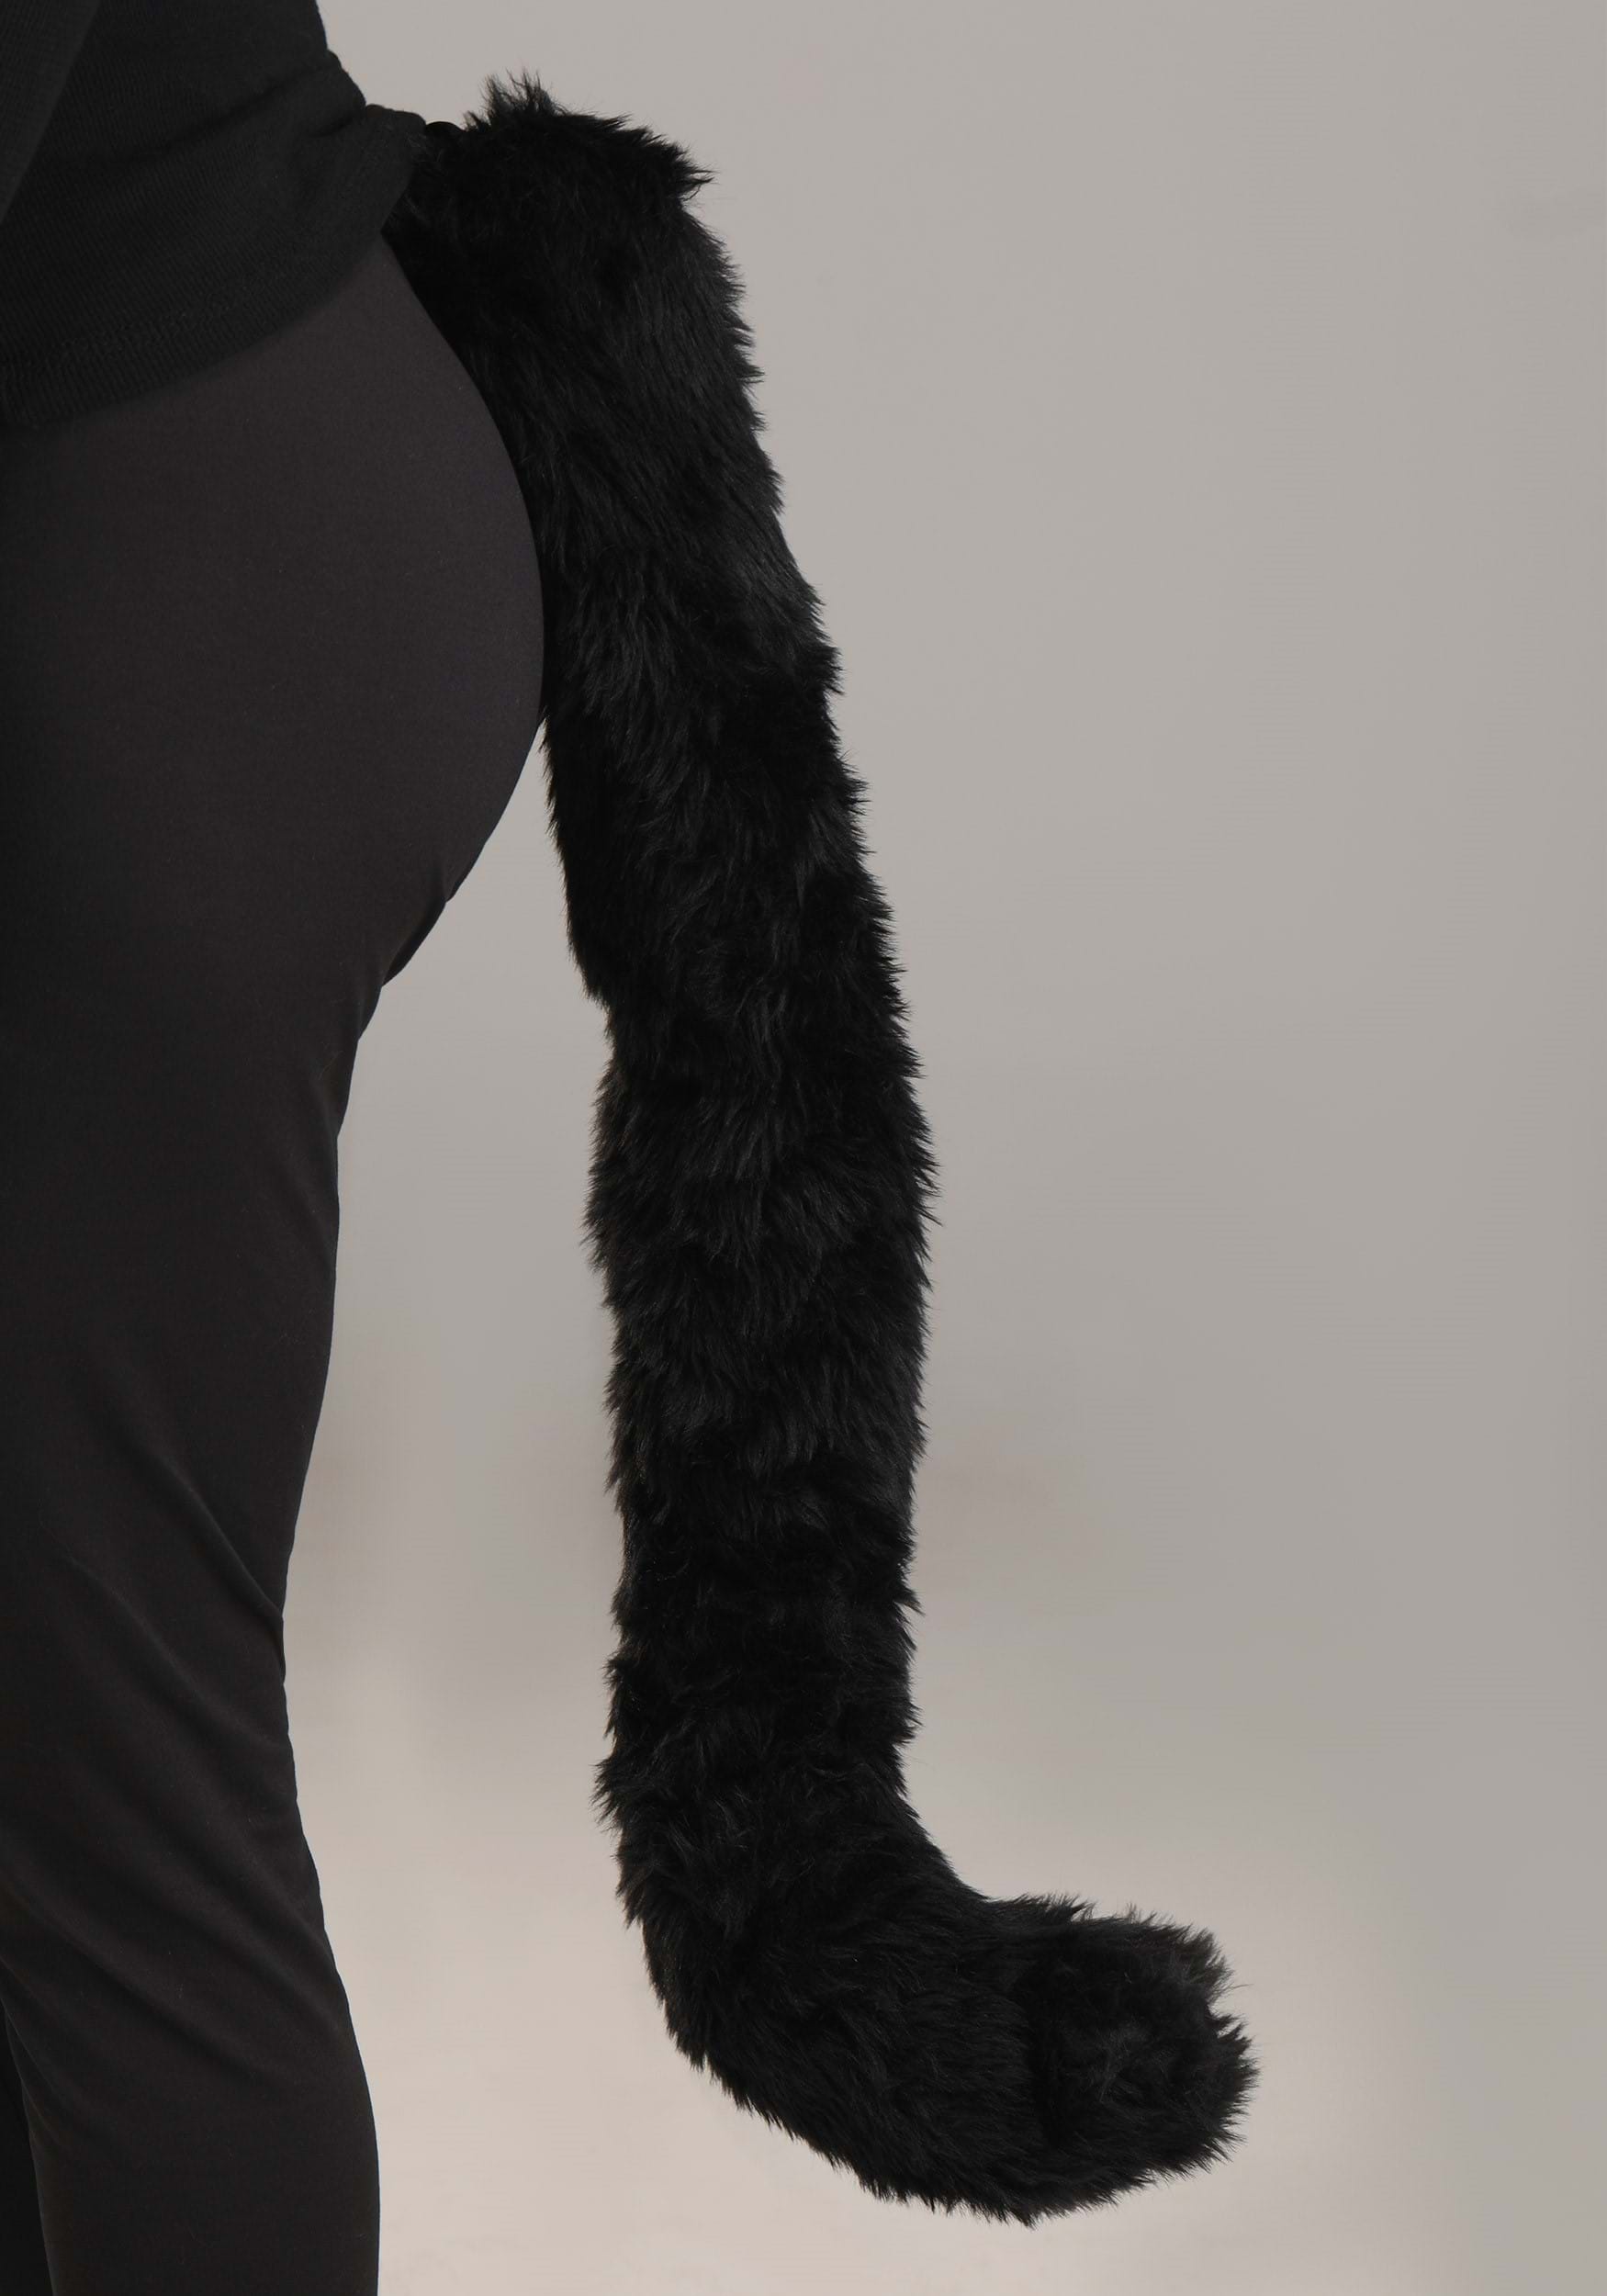 Deluxe Black Cat Costume Kit